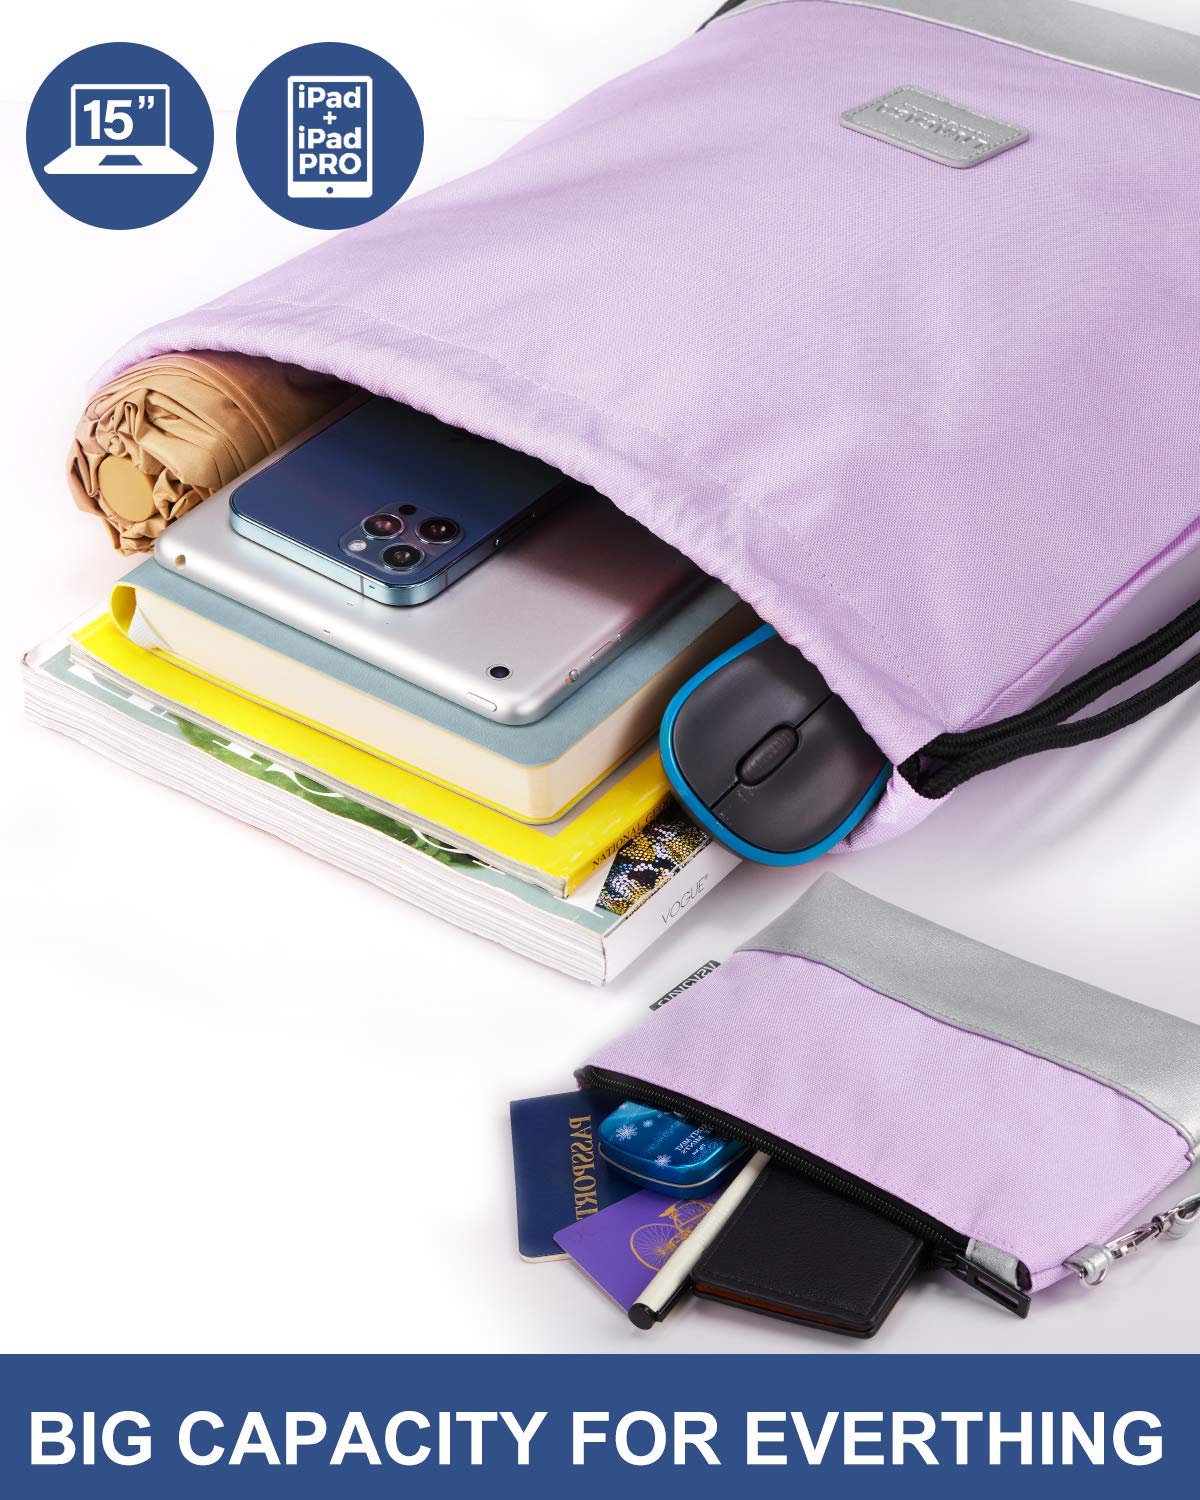 Drawstringbag-Waterproof-portable-soft-6